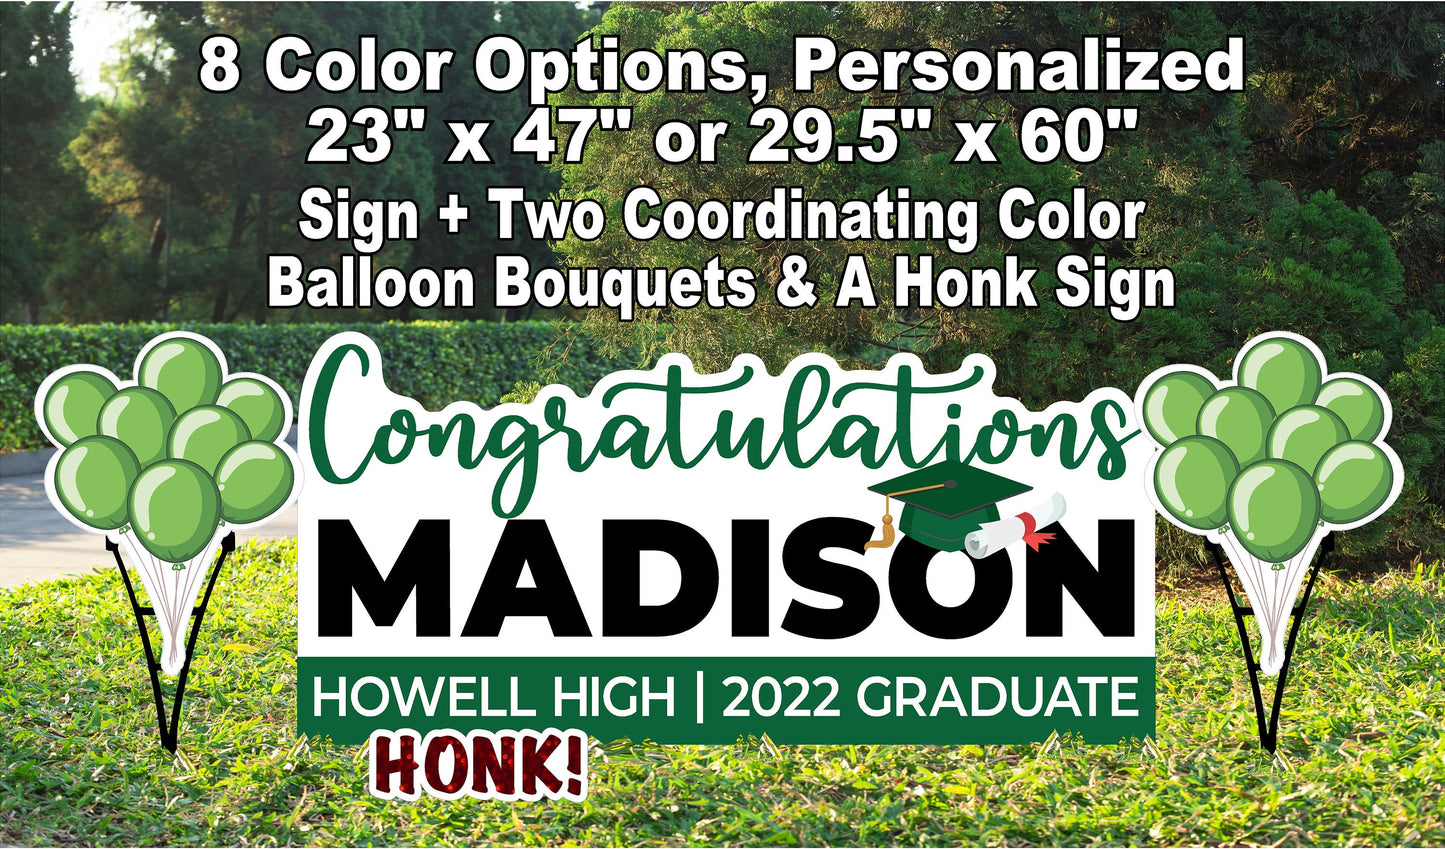 LARGE GRADUATION SIGN | 2022 High School / College Senior Grad Graduate Congrats | Personalized Outdoor Lawn Yard Card Decoration | 2 Sizes